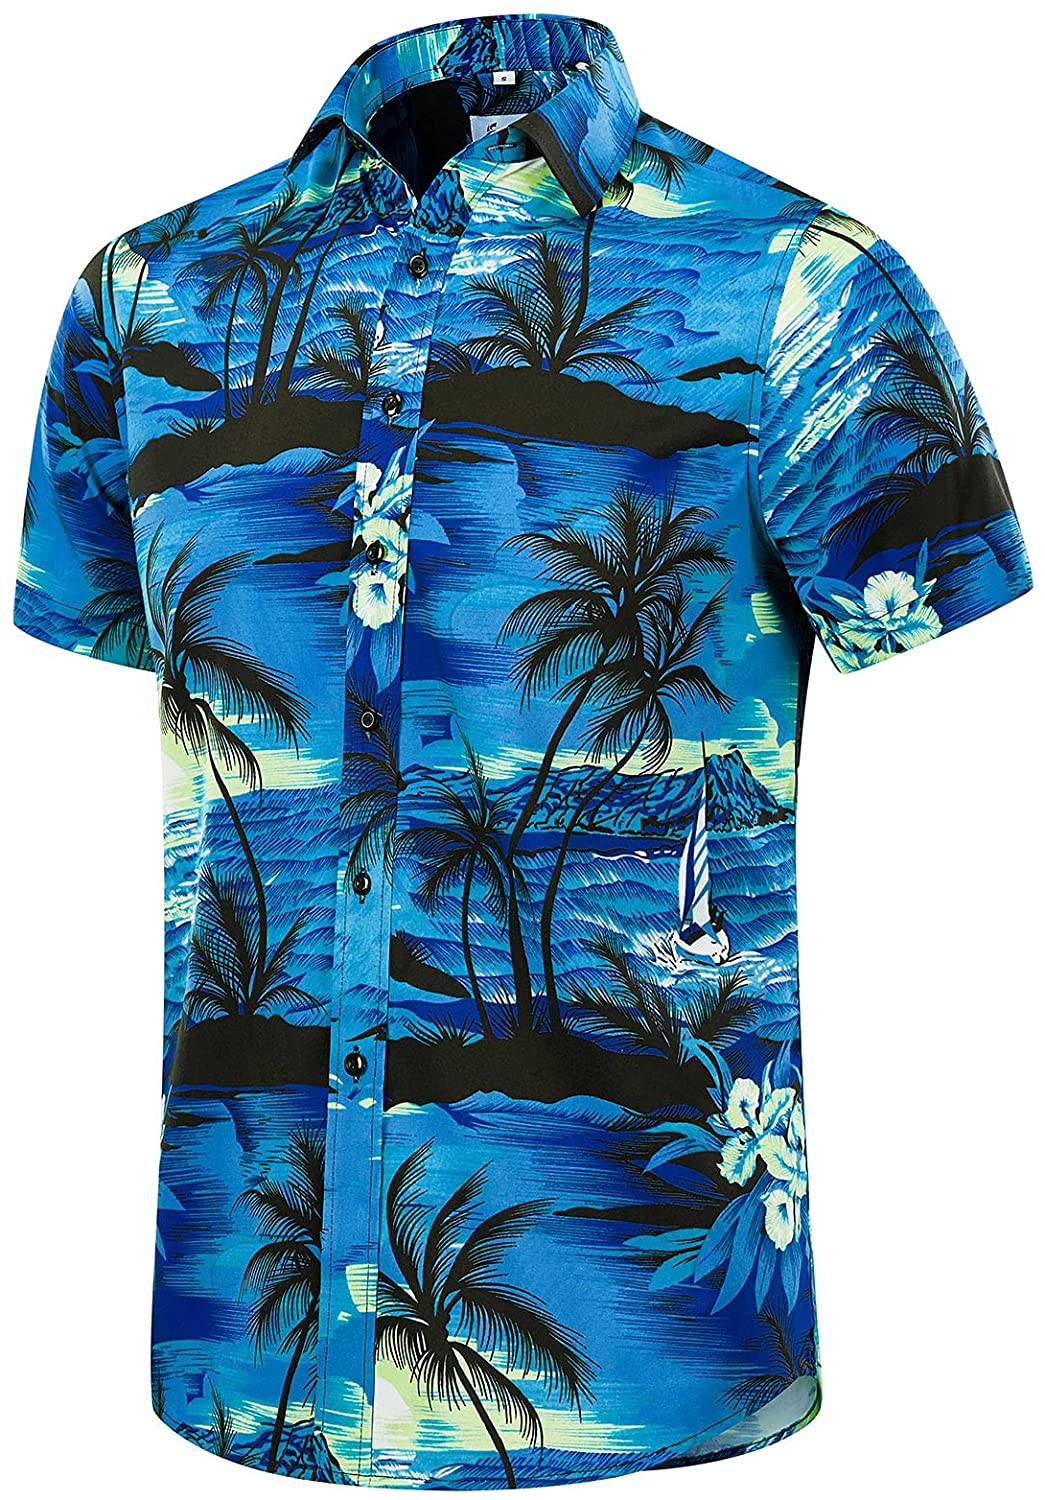 EUOW Men's Hawaiian Shirt Short Sleeves Printed Button Down Summer